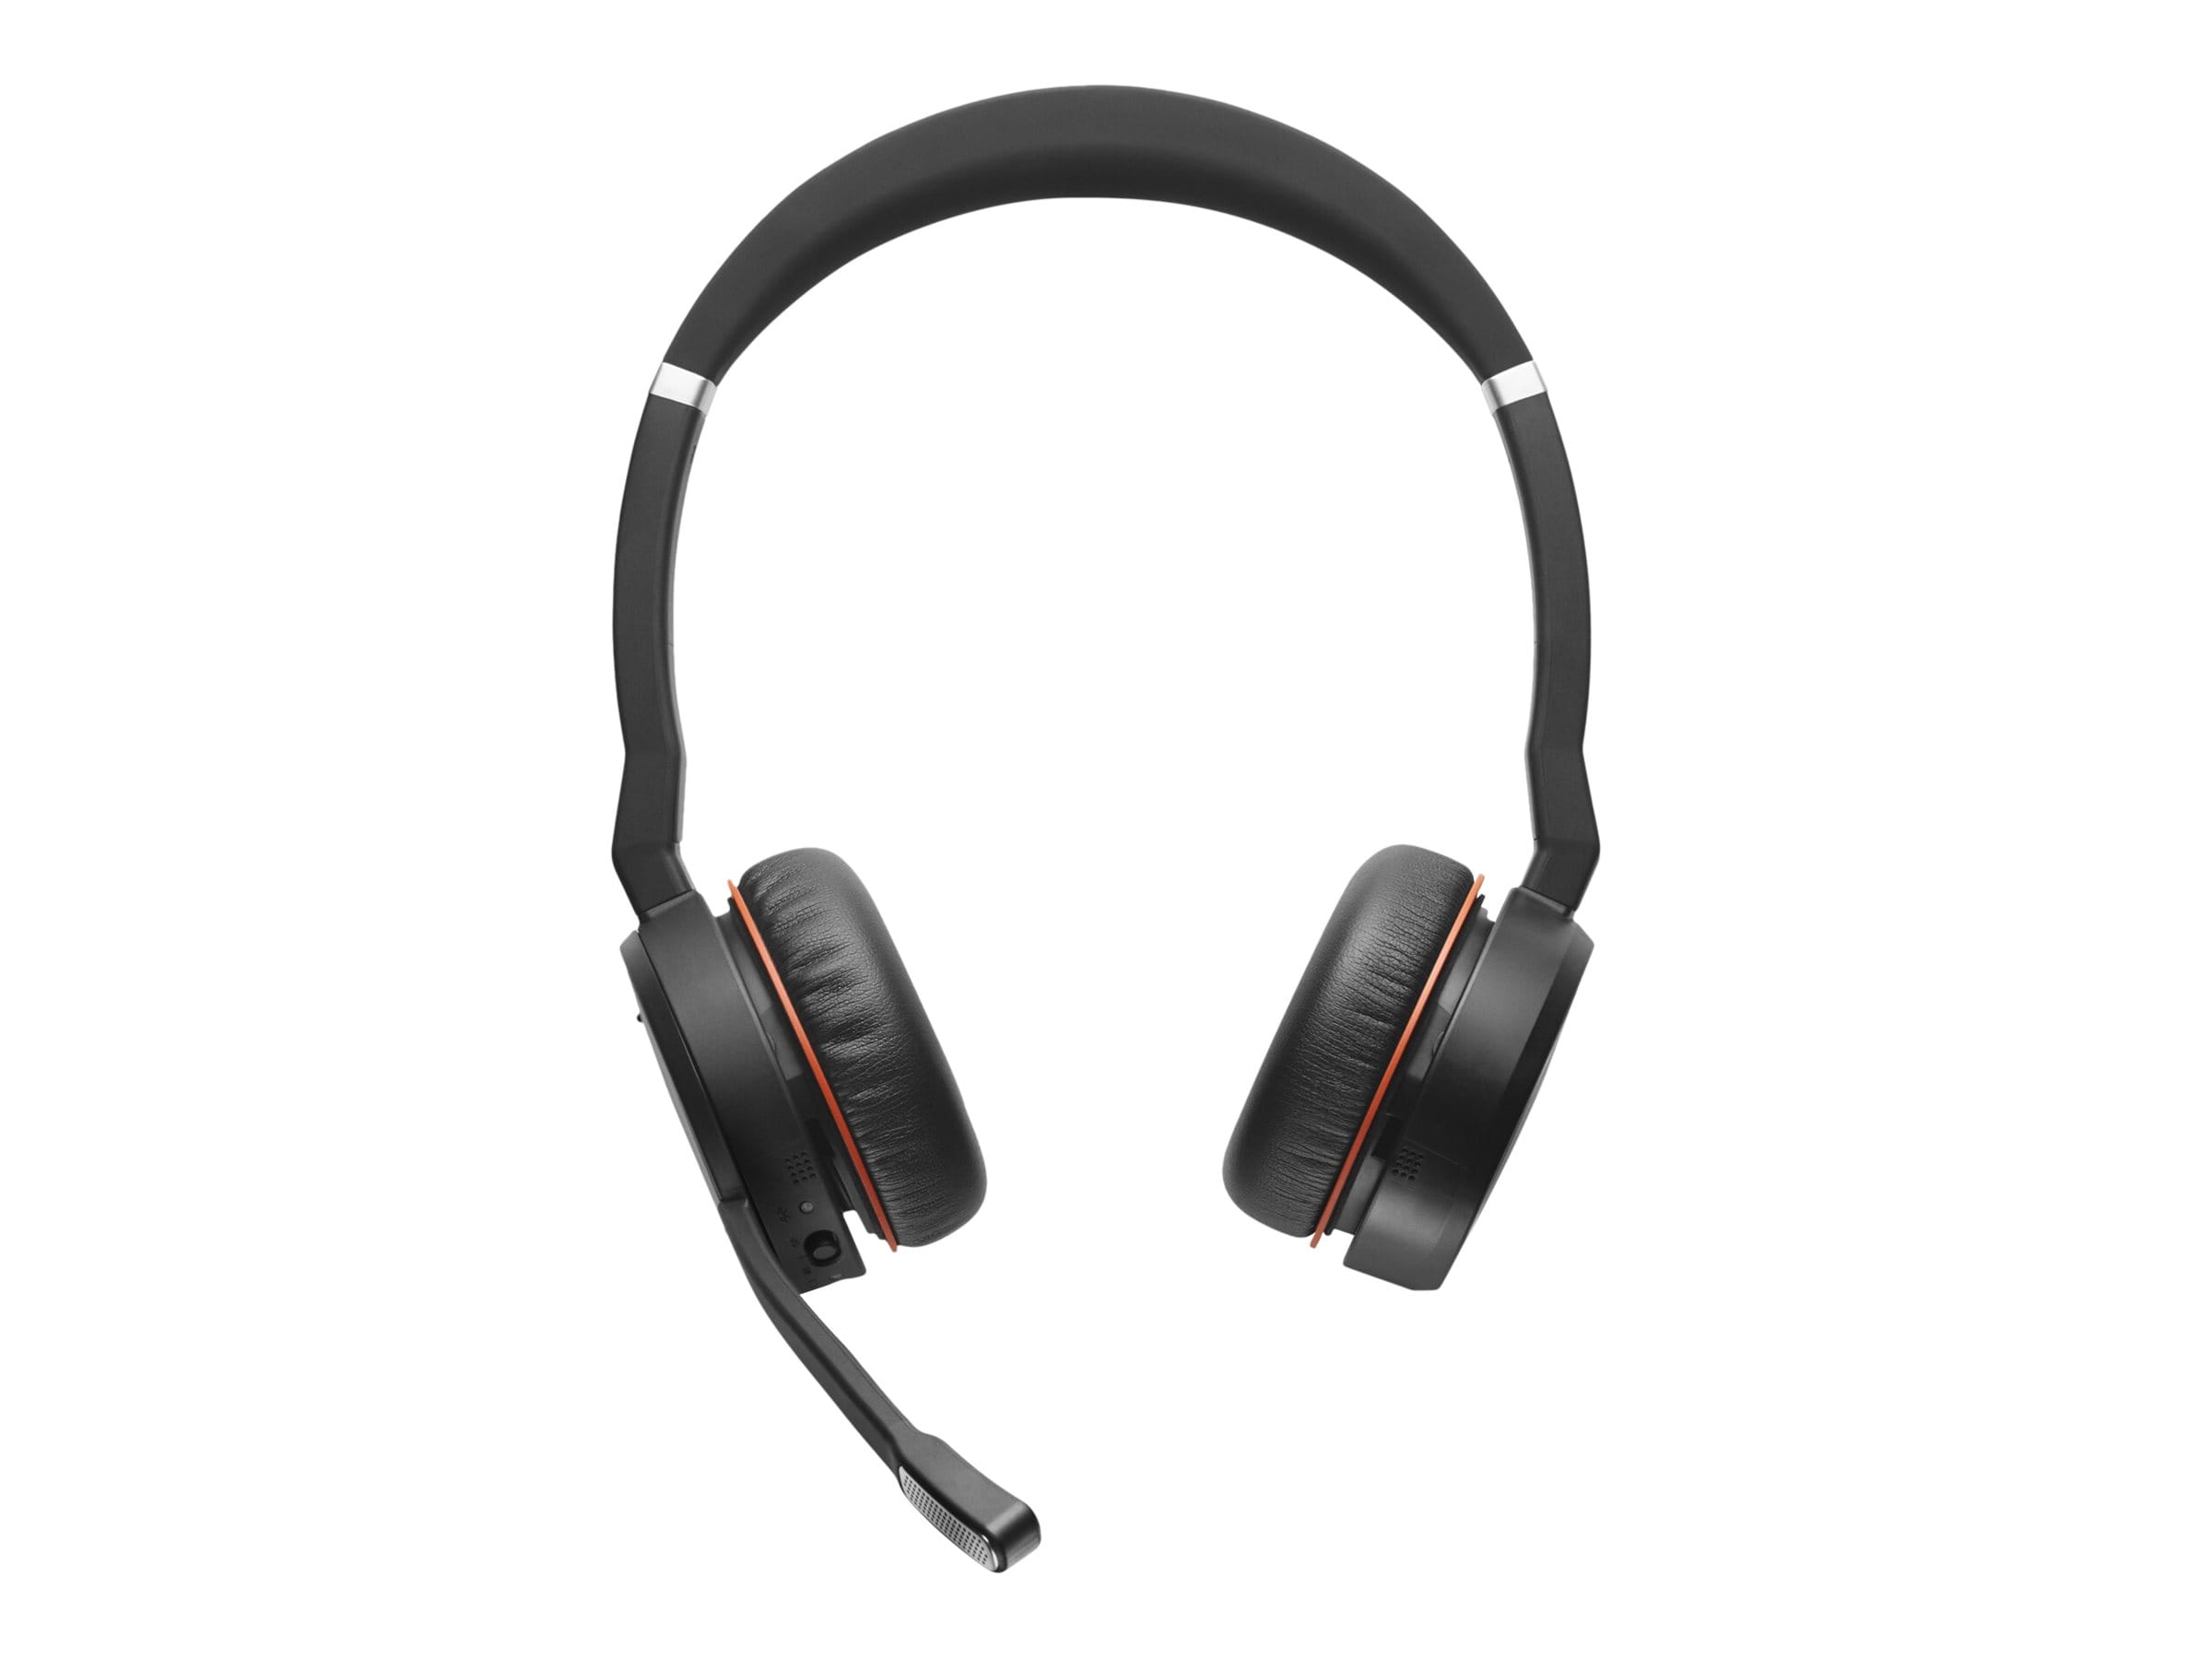 Jabra Evolve 75 SE UC Stereo - Headset - On-Ear